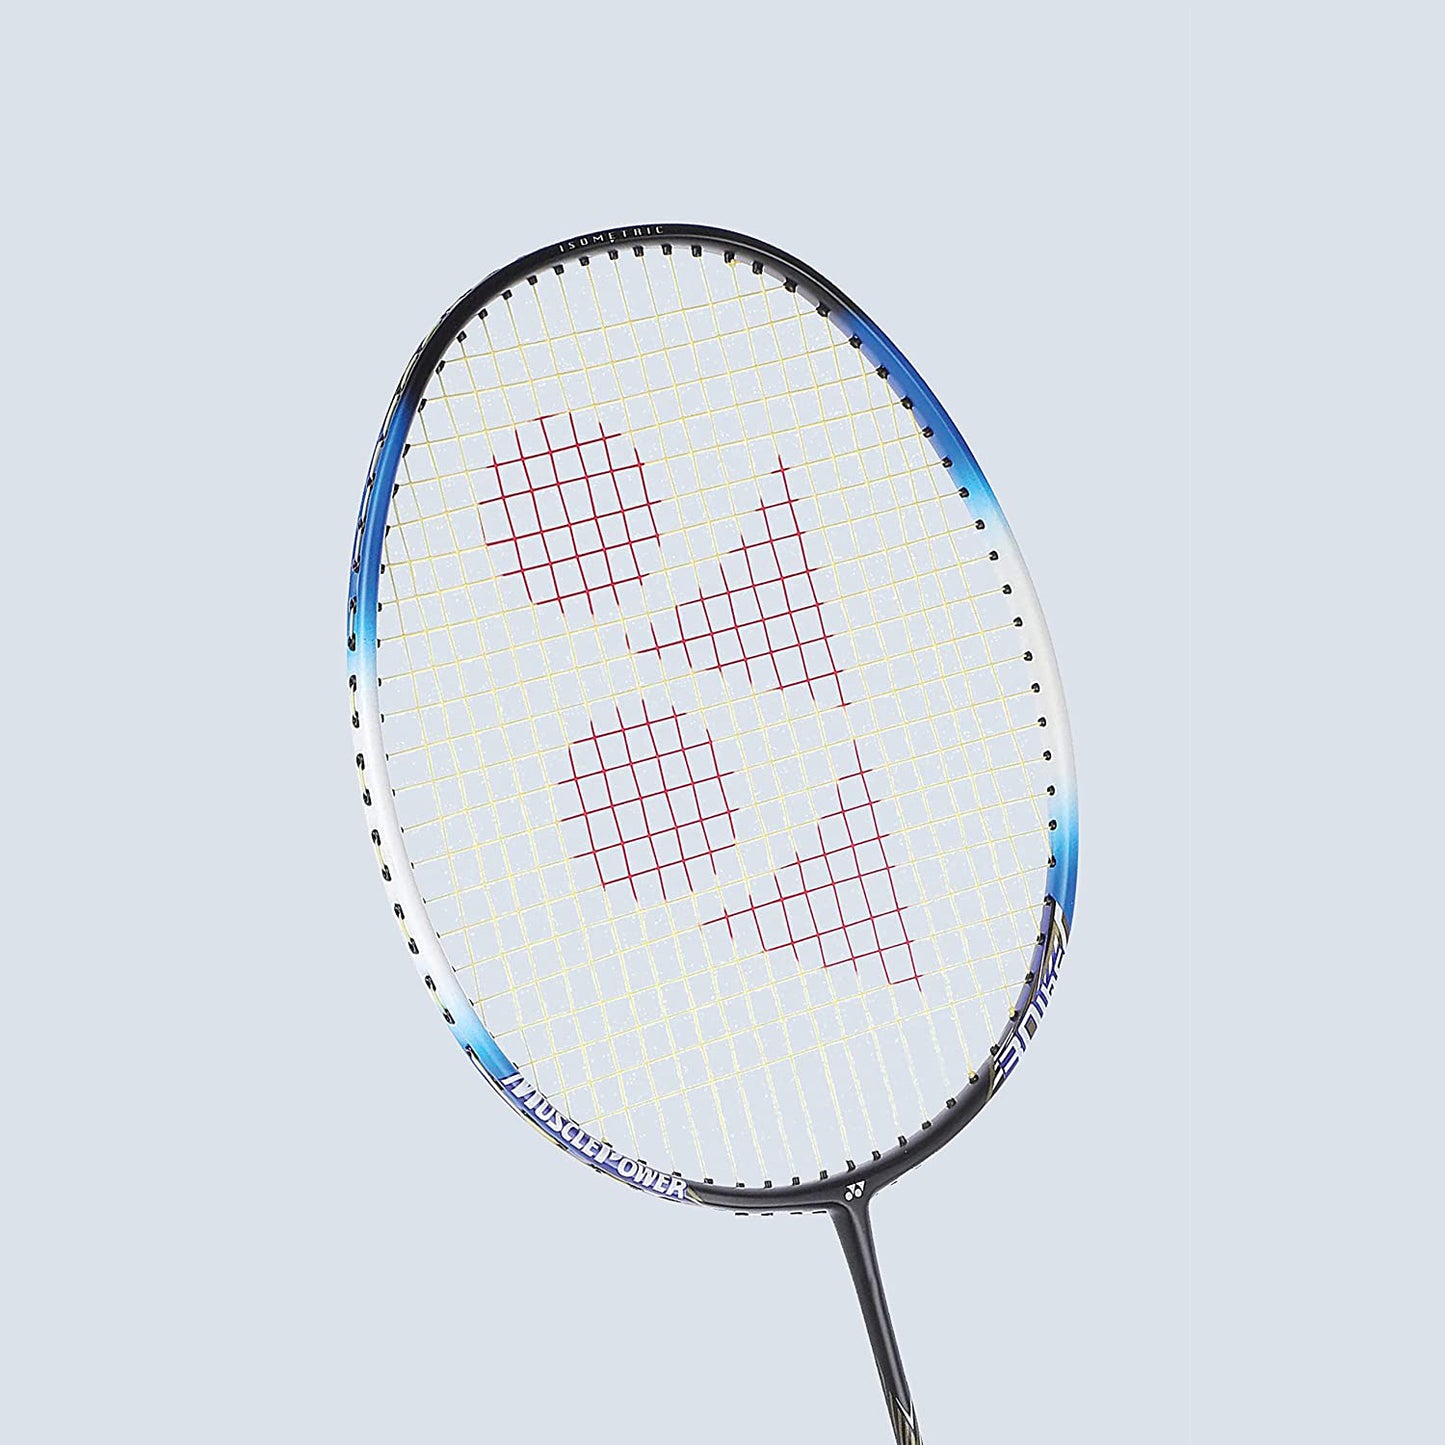 Yonex Muscle Power 22 LT Strung Badminton Racquet, 4U-G5 (Black/Blue) - Best Price online Prokicksports.com